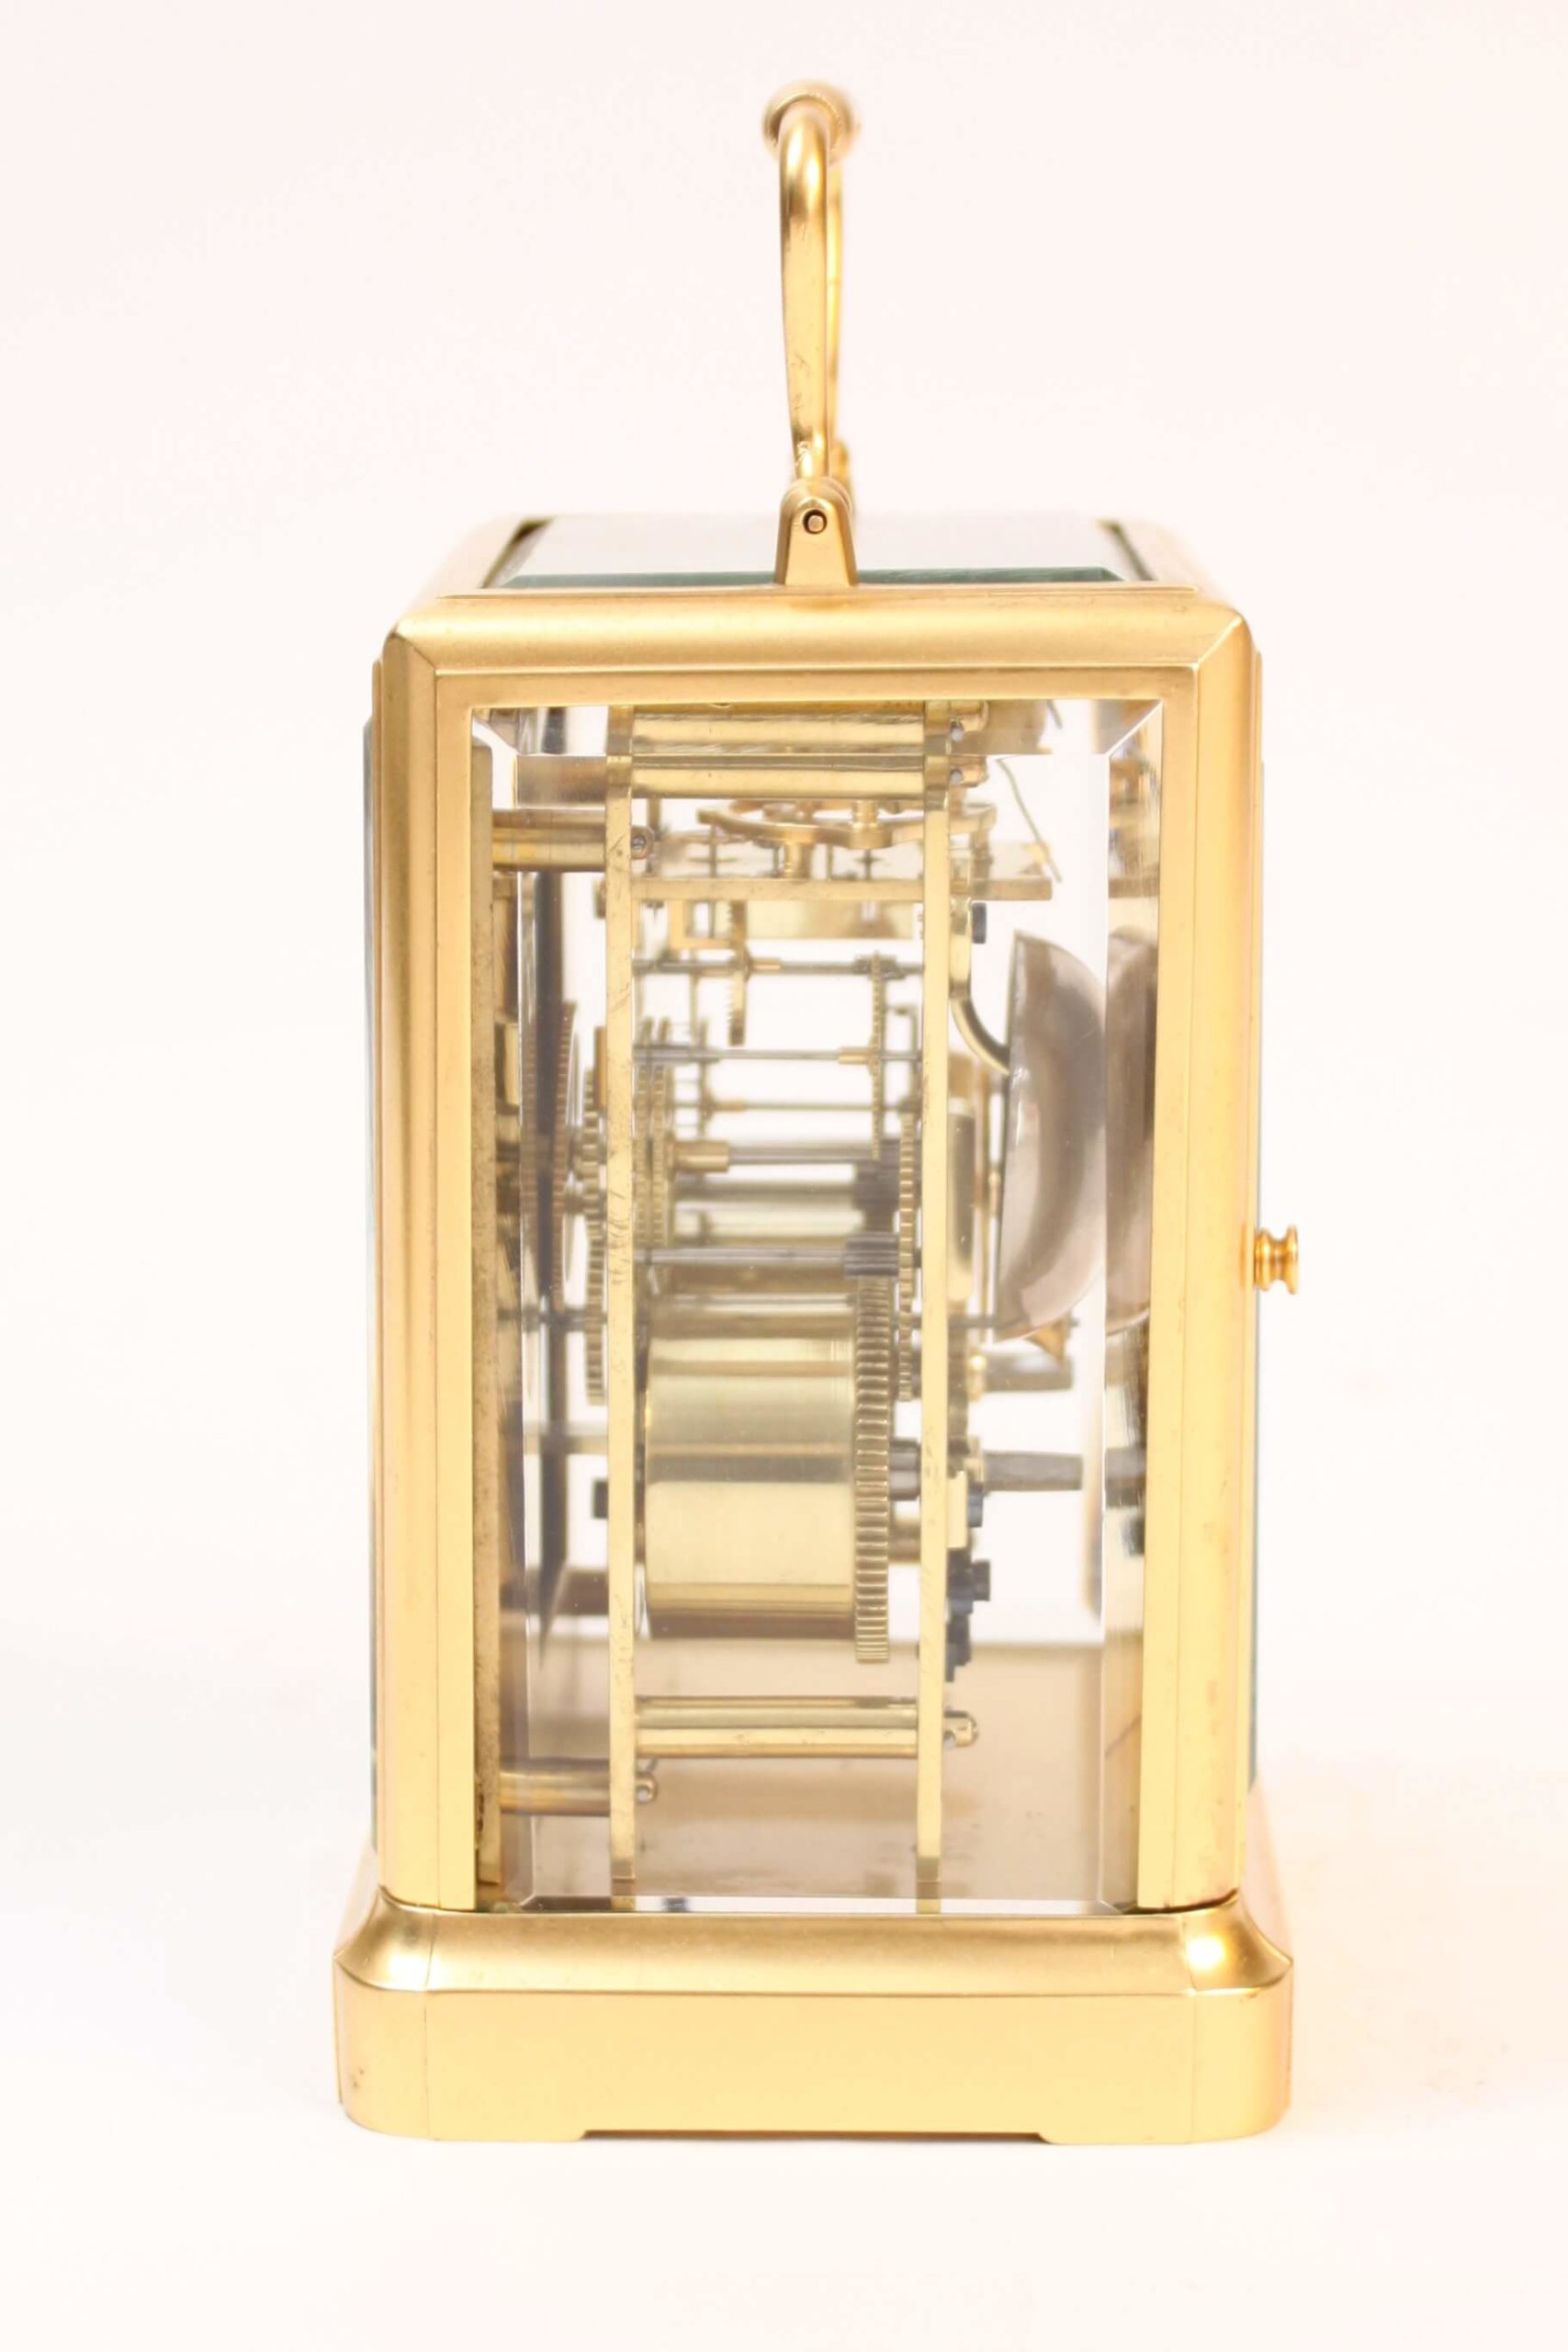 French-one-piece-brass-antique-carriage-travel-clock-jules-paris-escapement-